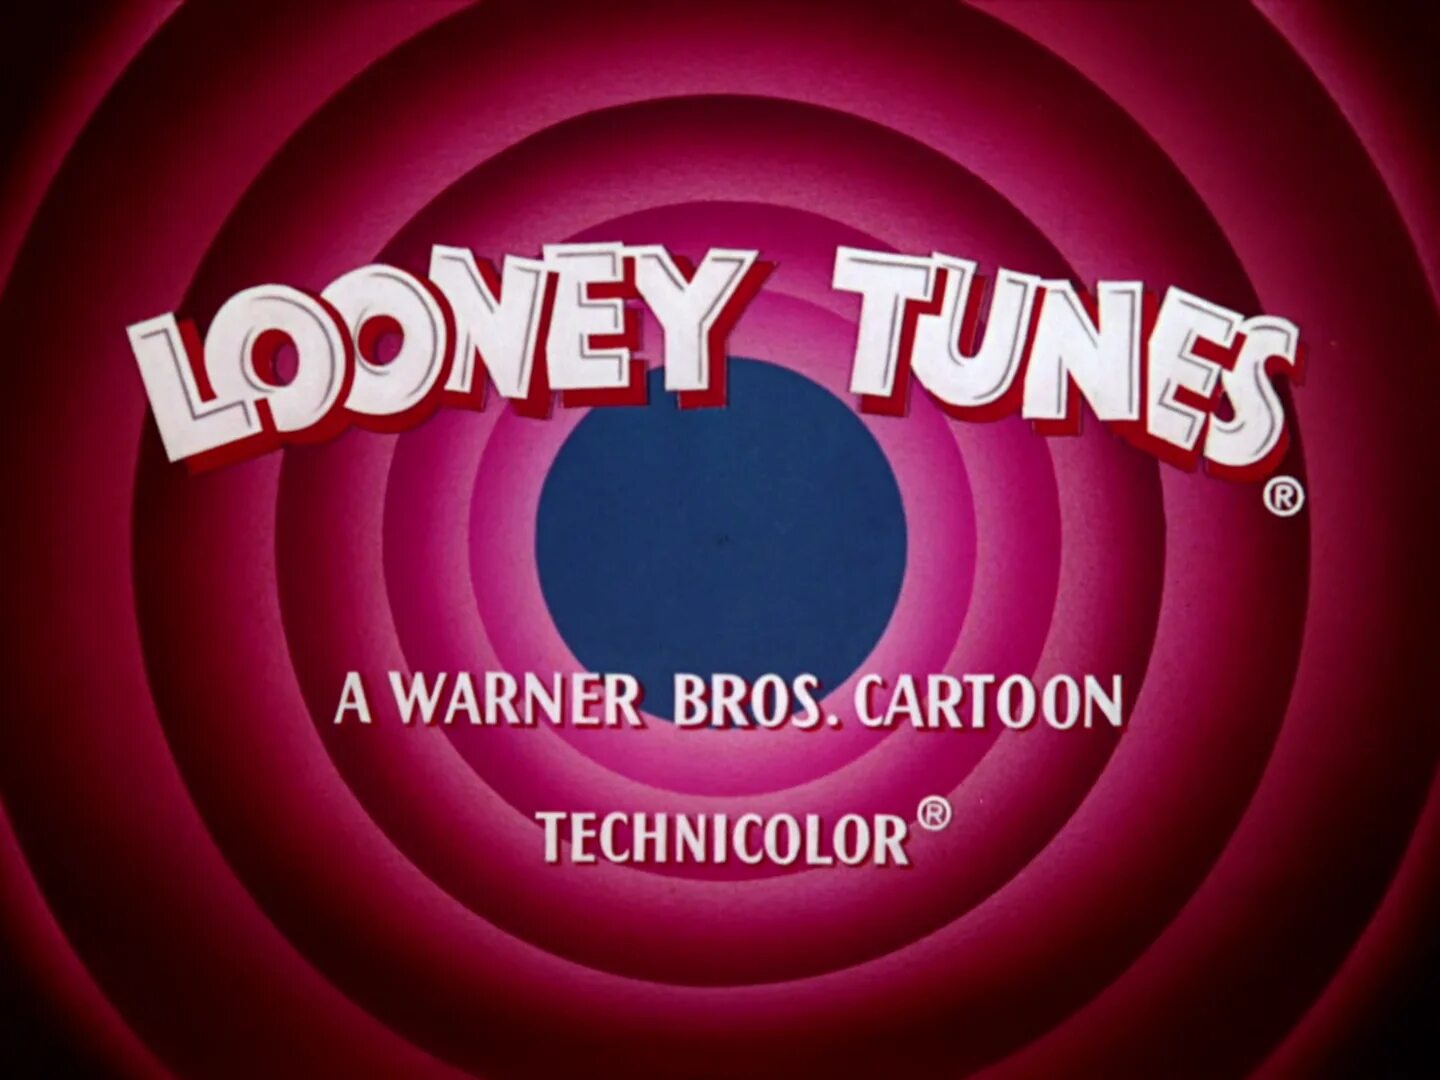 Opening tune. Thats all Folks фон. Ворнер БРОС Луни. Looney Tunes a Warner Bros cartoon Technicolor. Technicolor cartoons.